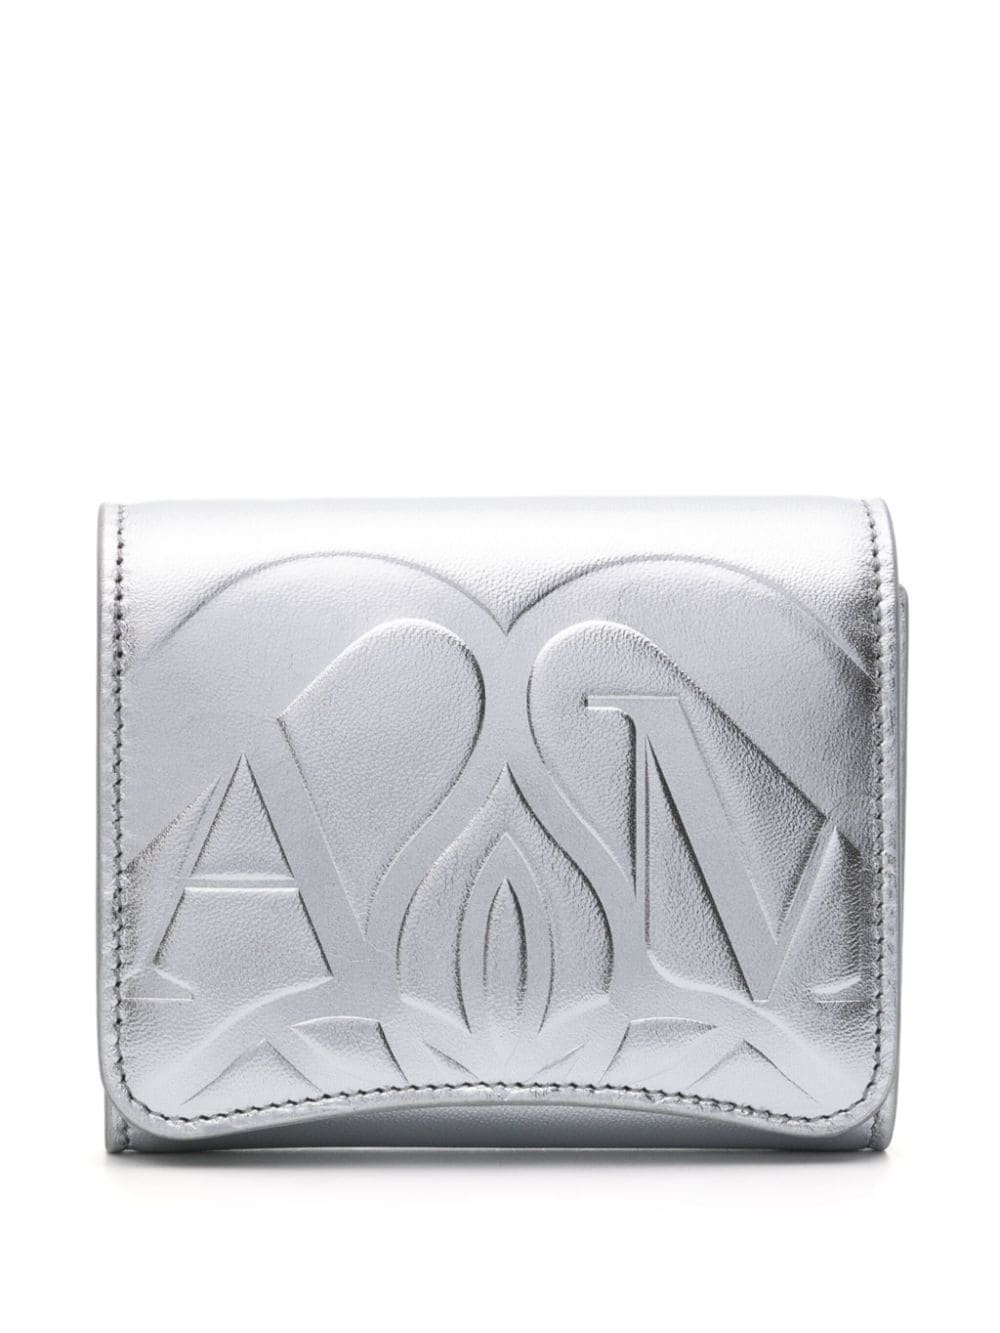 tri-fold metallic leather wallet - 1